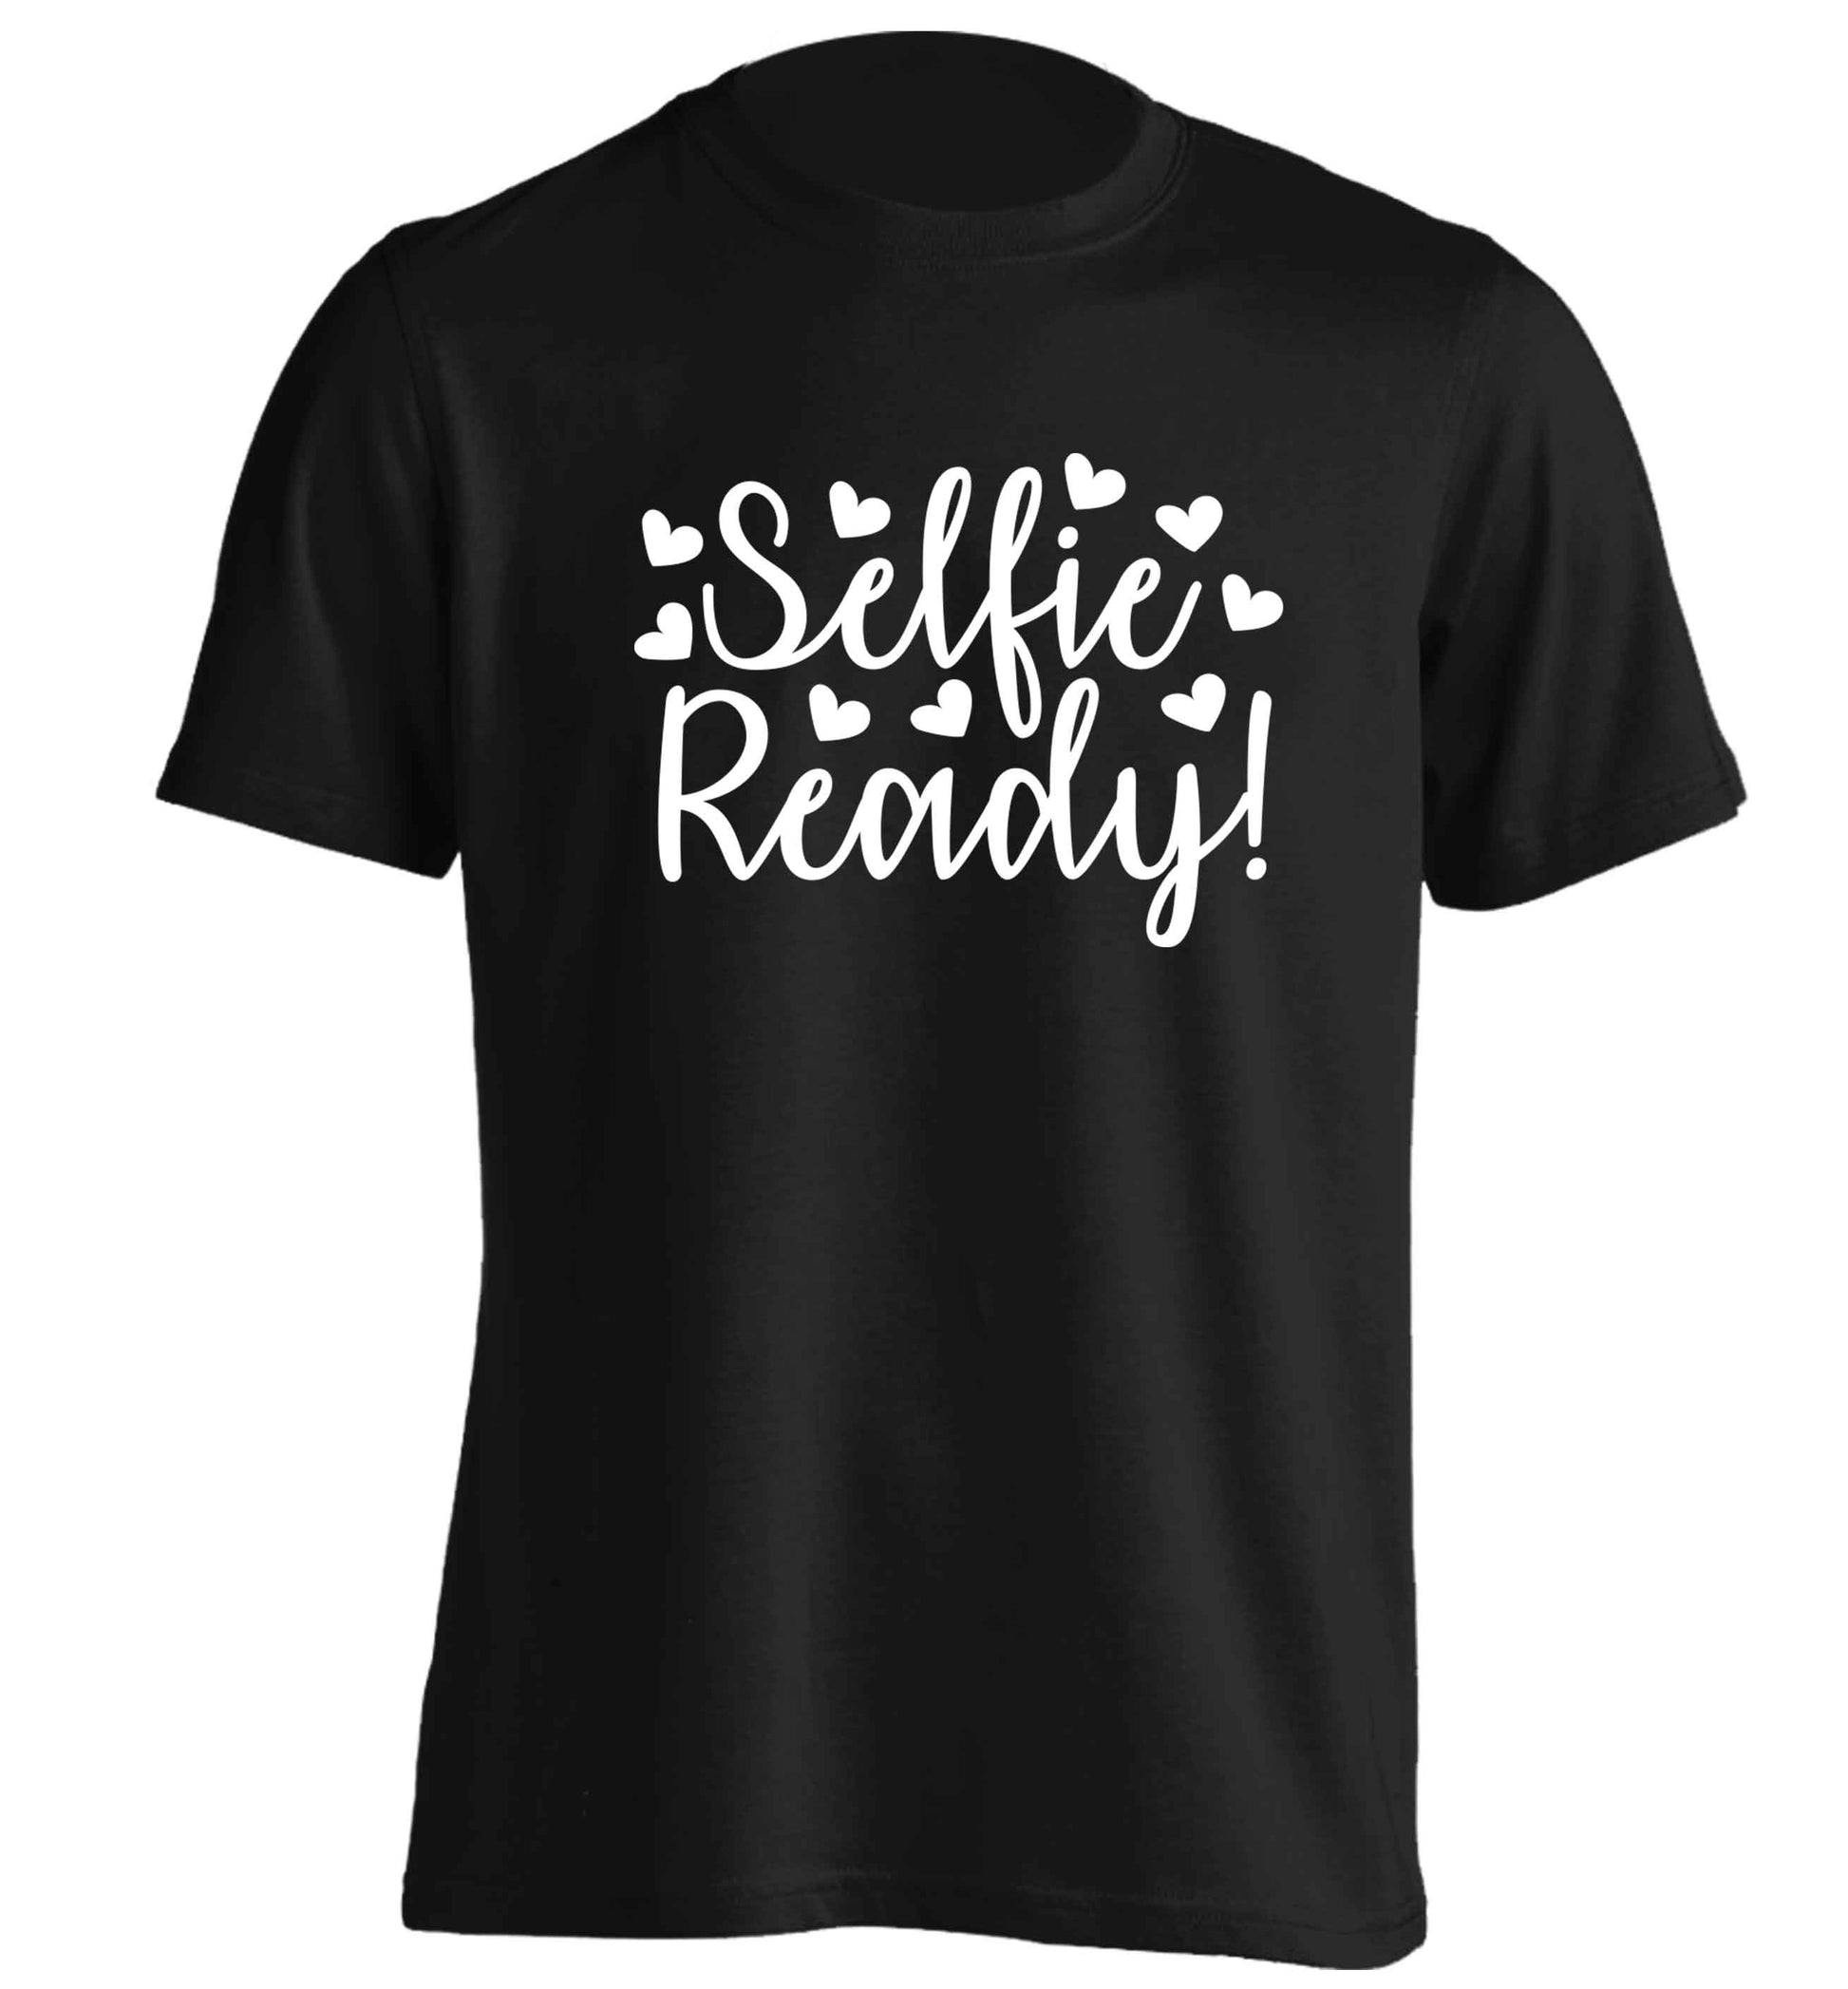 Selfie ready adults unisex black Tshirt 2XL